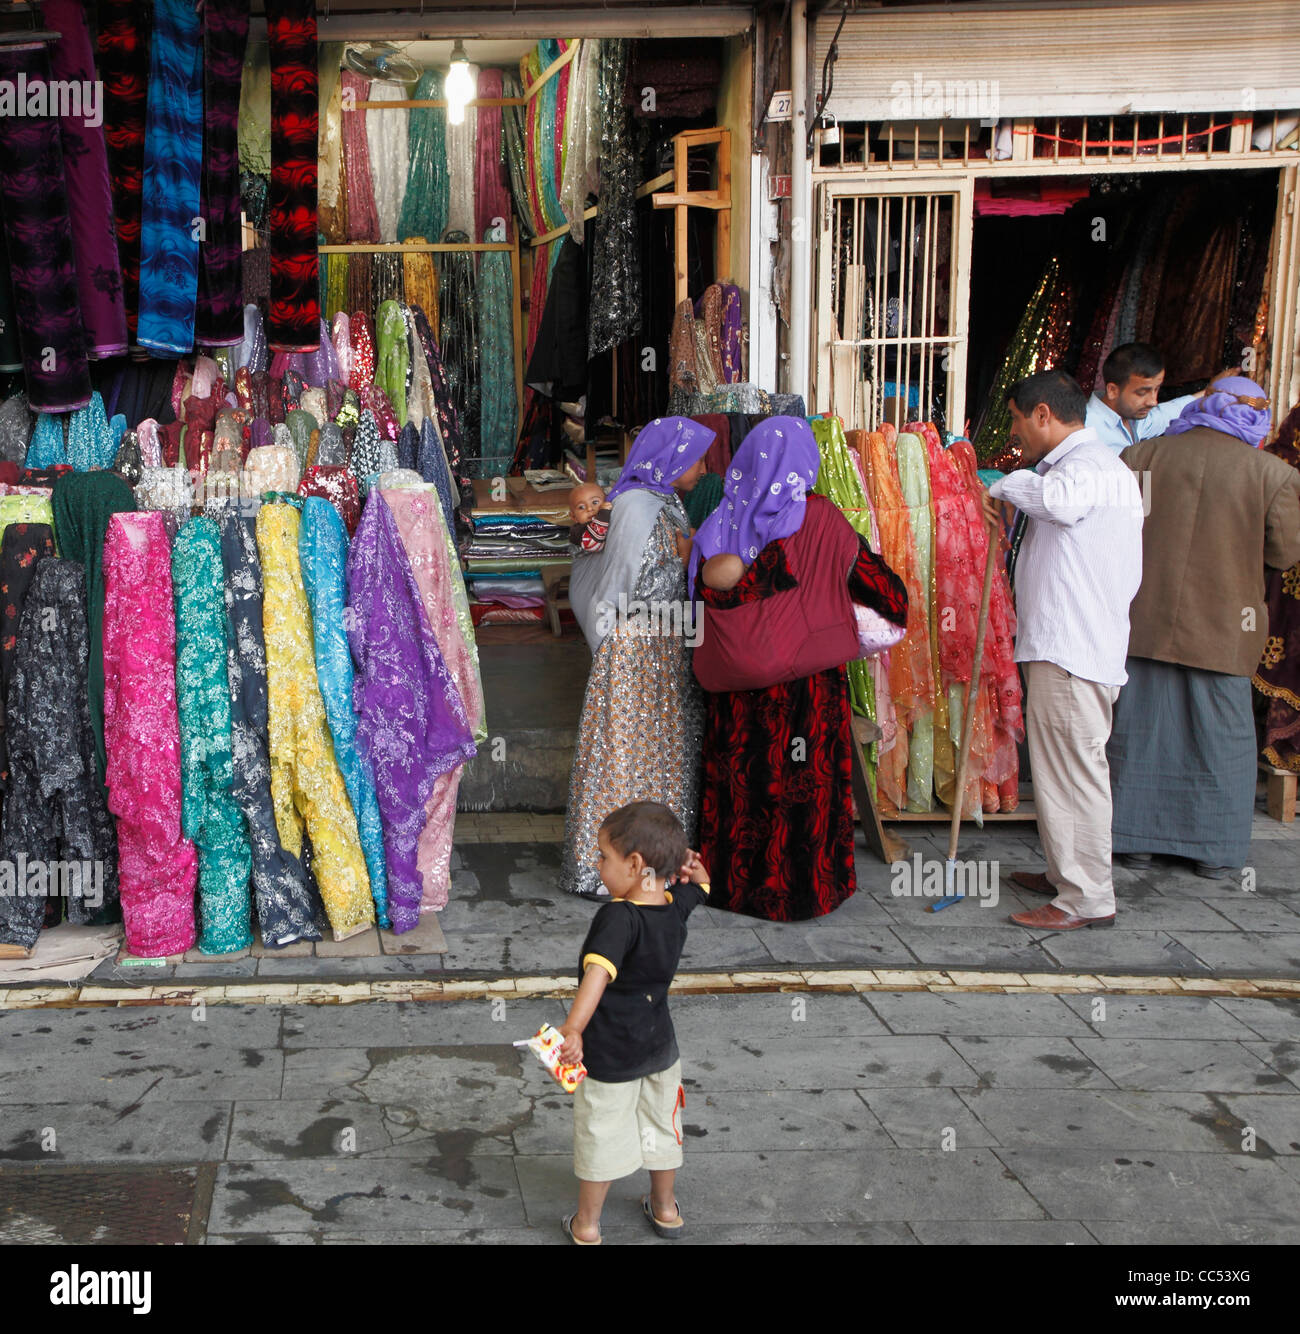 Turkey, Sanliurfa, bazaar, textile shop, people, Stock Photo